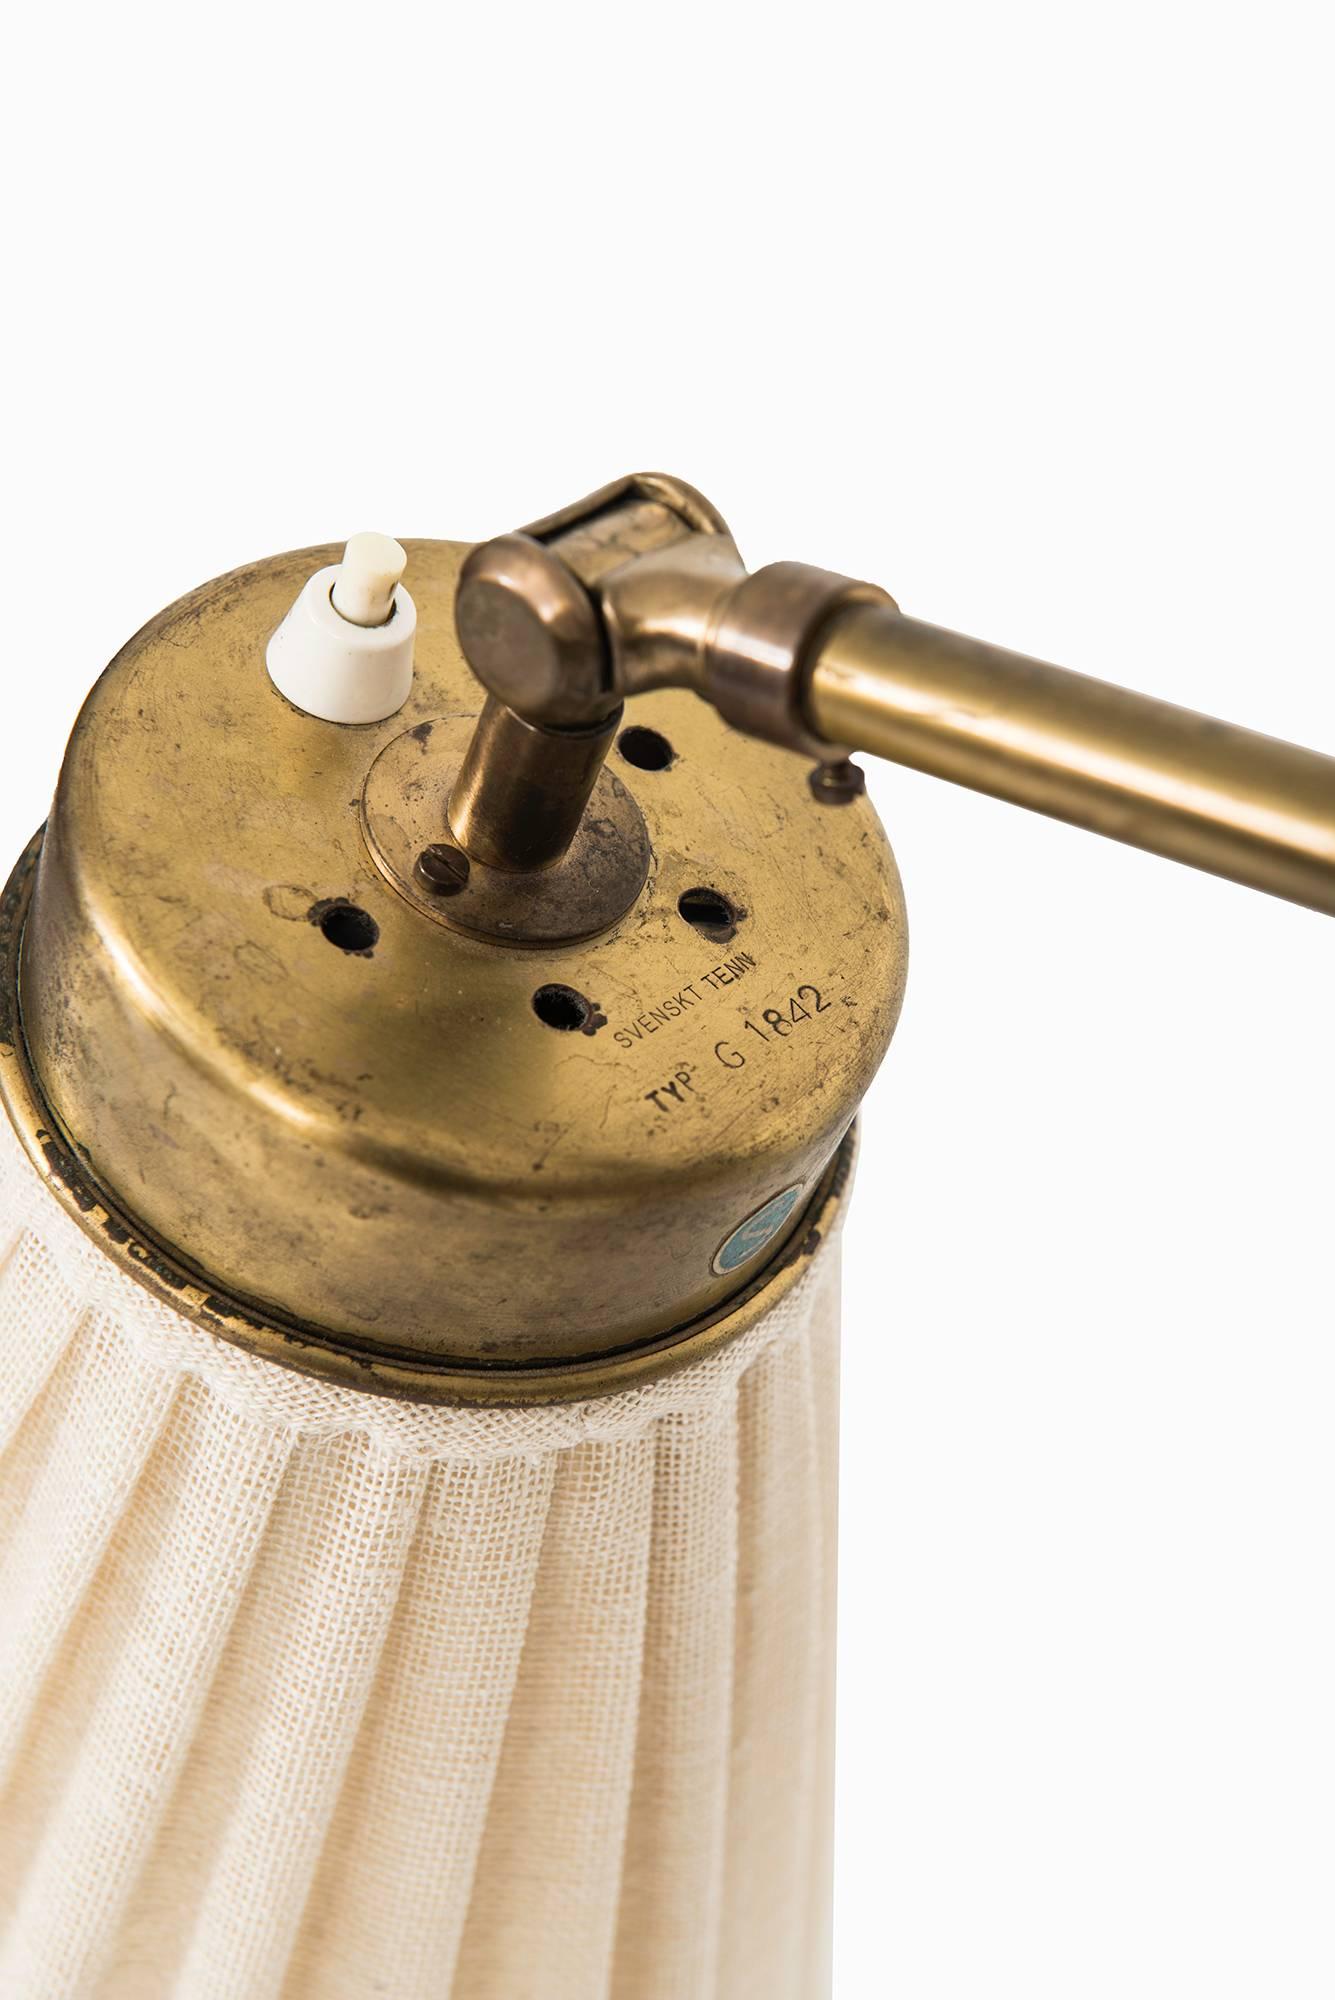 Swedish Josef Frank Floor Lamp Model 1842 Produced by Svenskt Tenn in Sweden